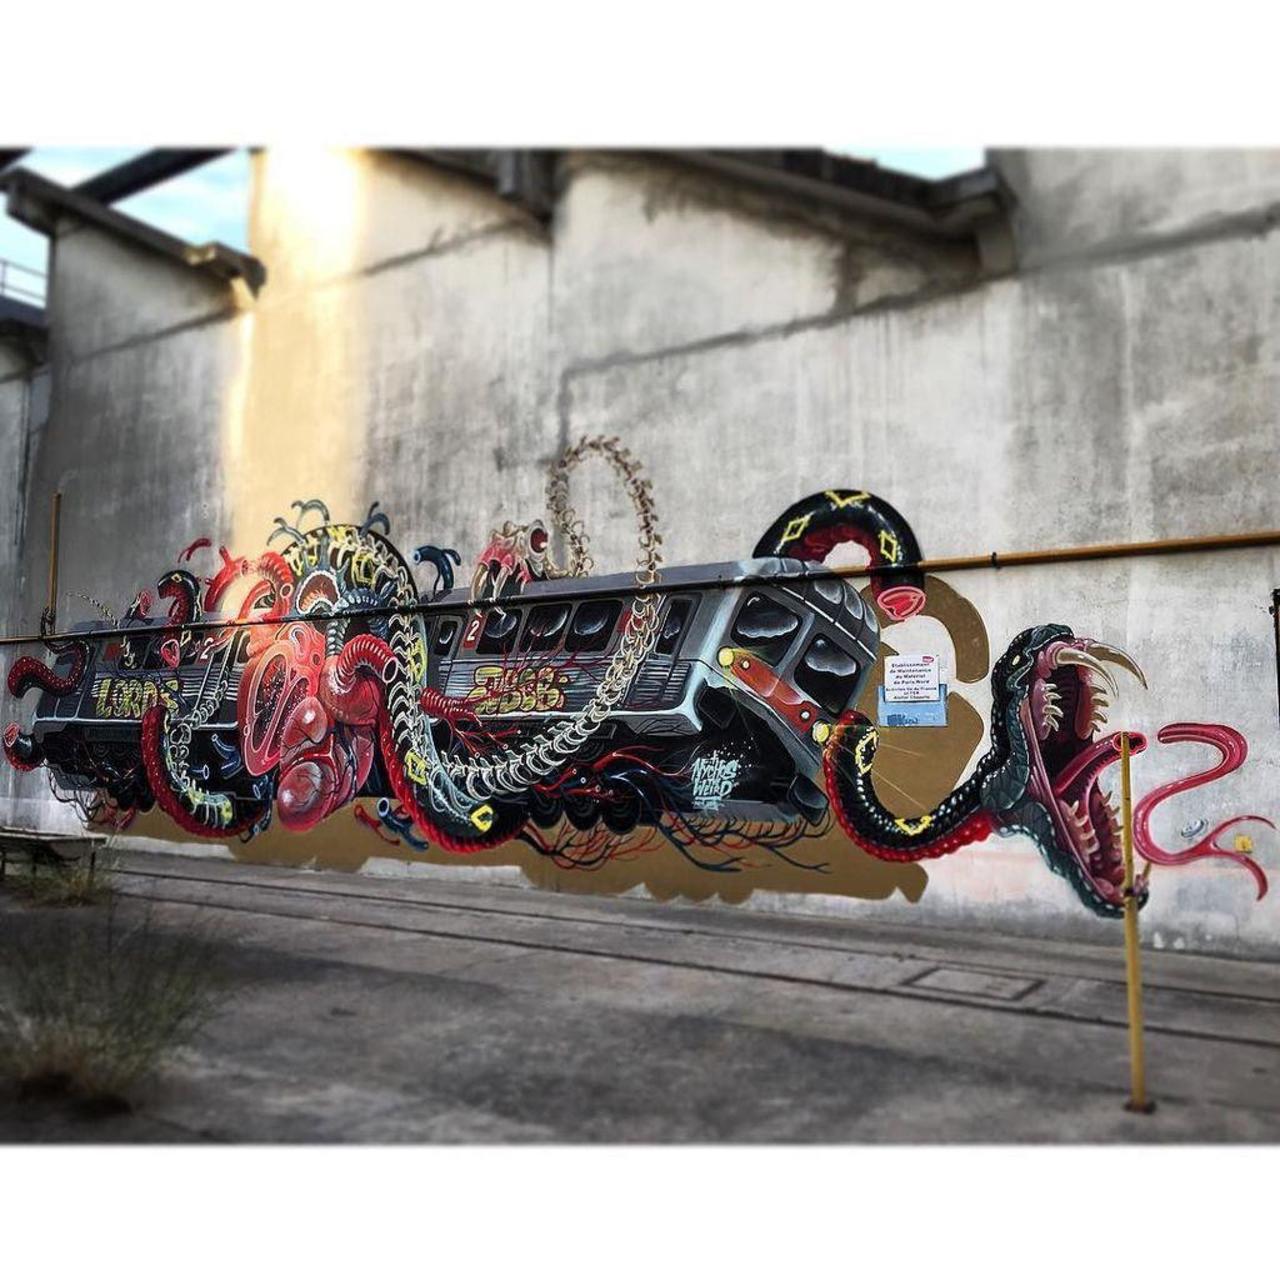 Snake On Train By @nychos... #streetart #graffiti #wall #snake #skeleton #snakesonatrain #… http://ift.tt/1GcKMQp http://t.co/cY8kc7kl8M